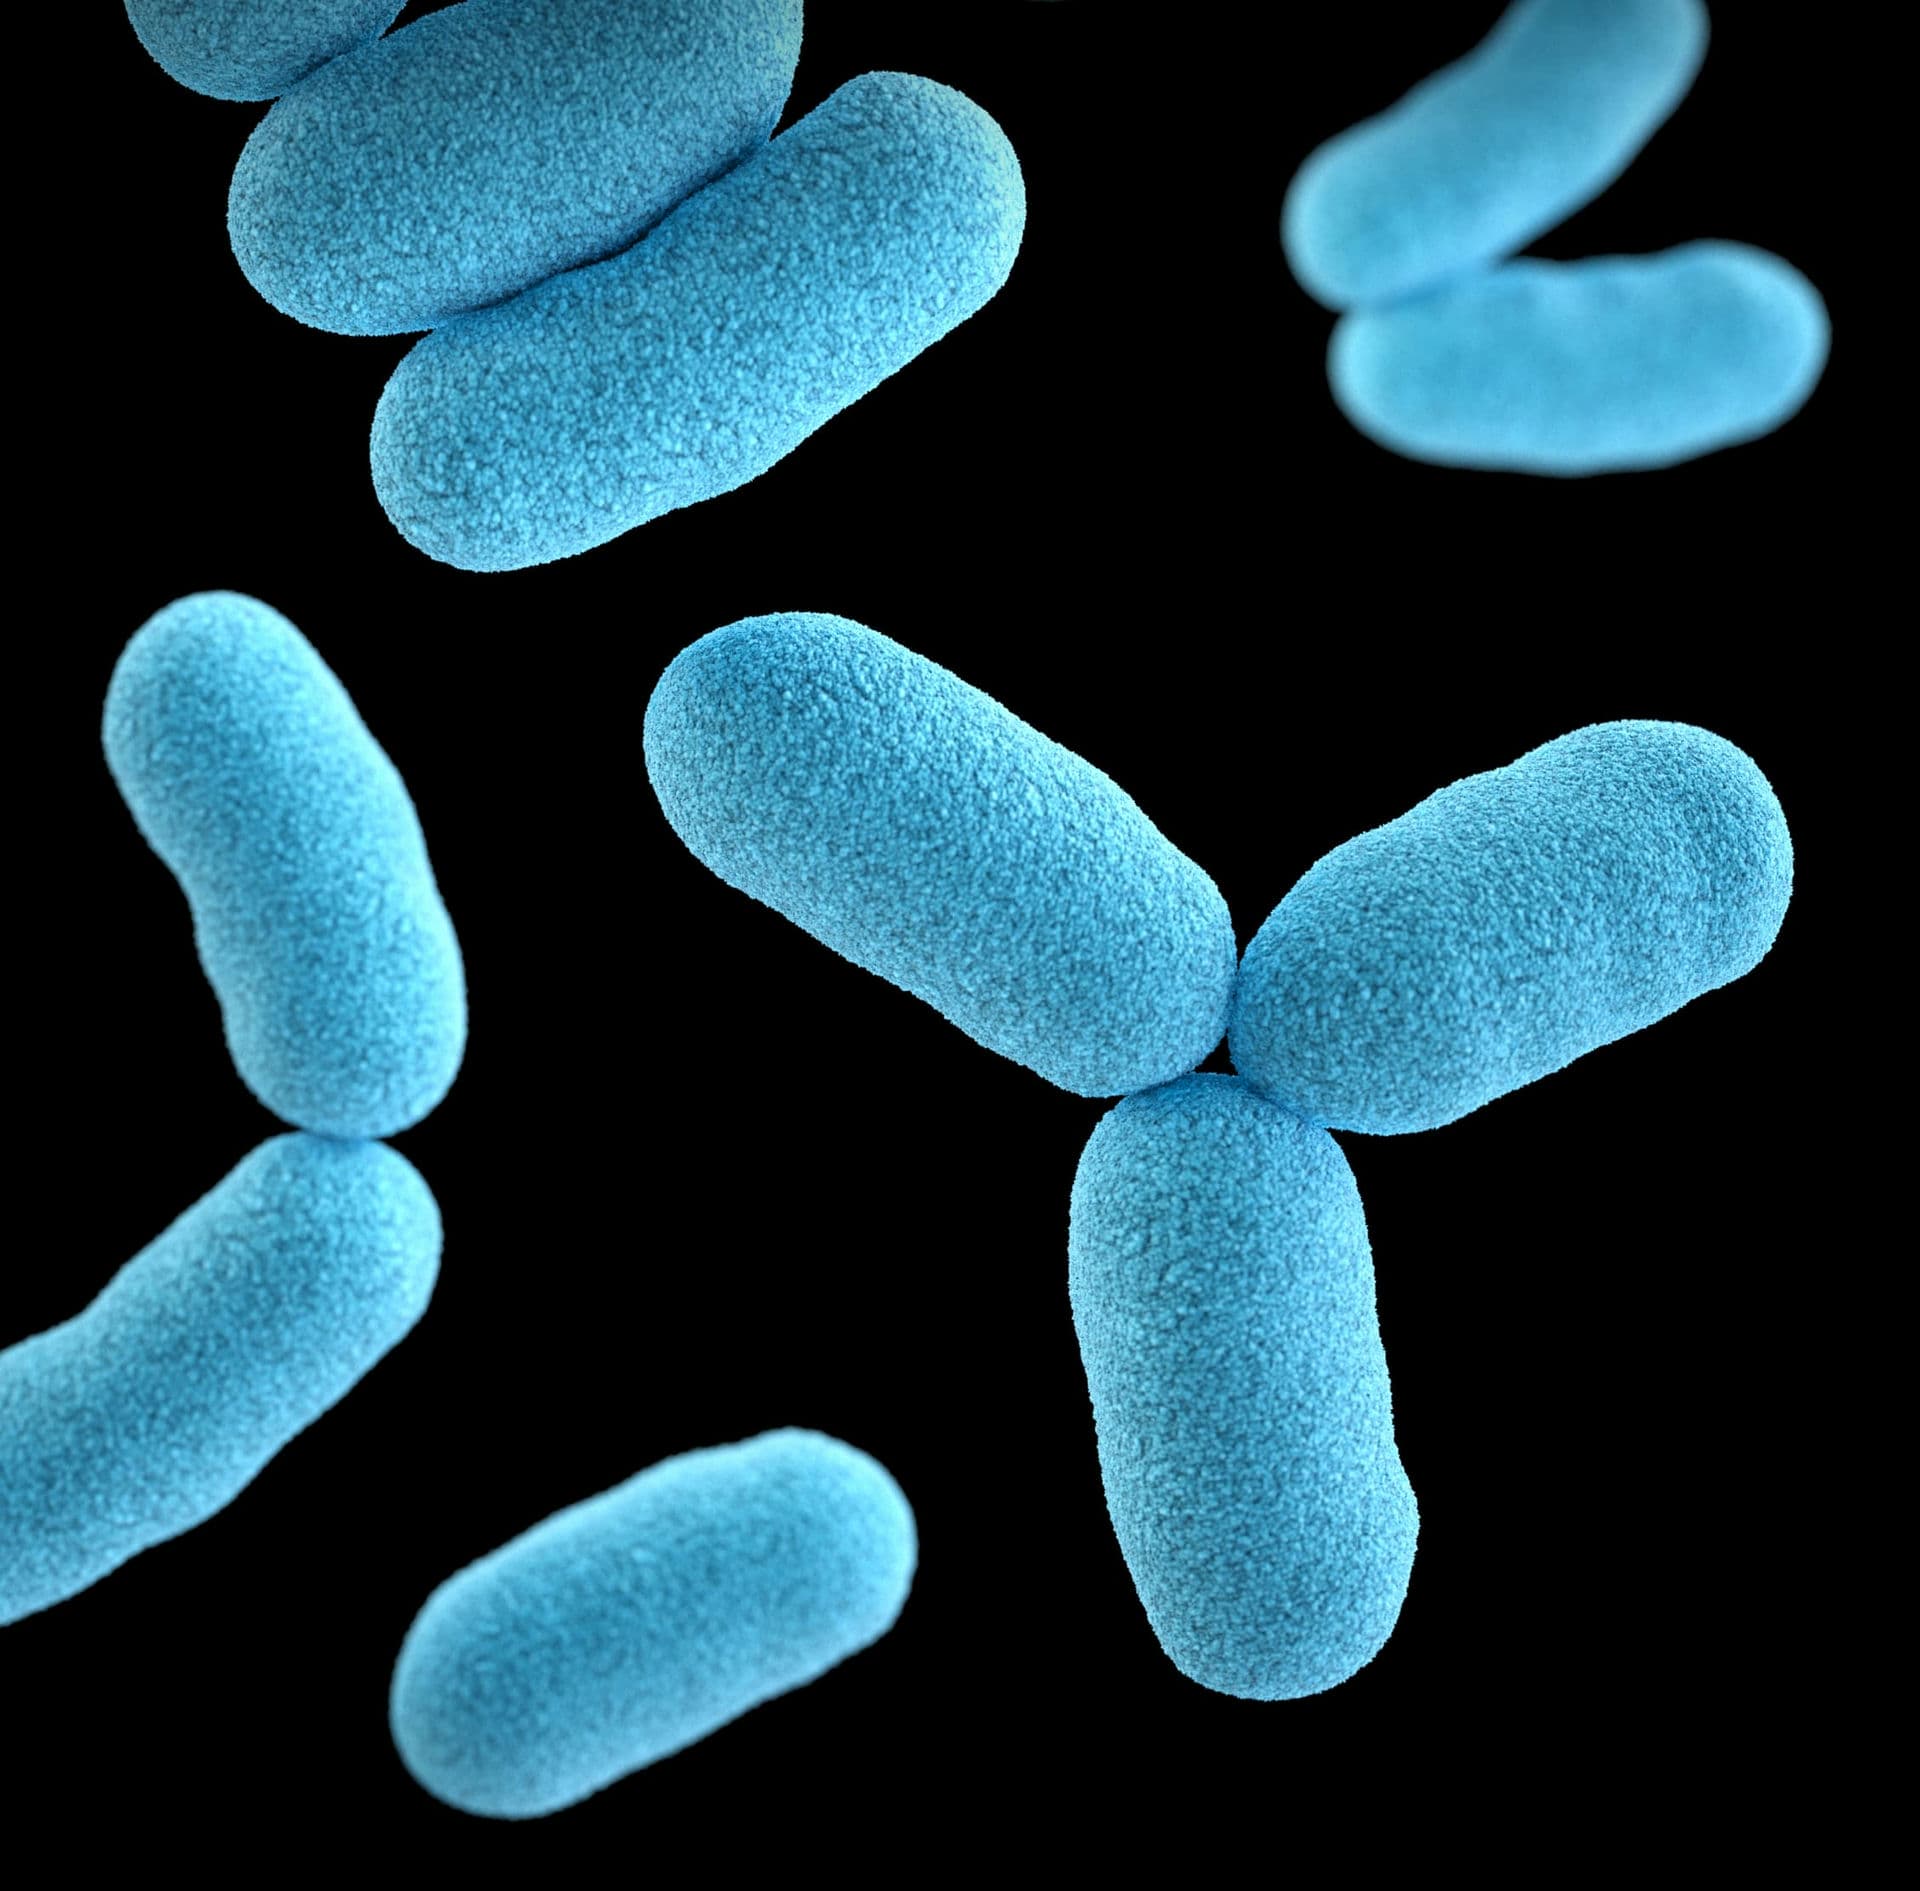 Mikrobakterien